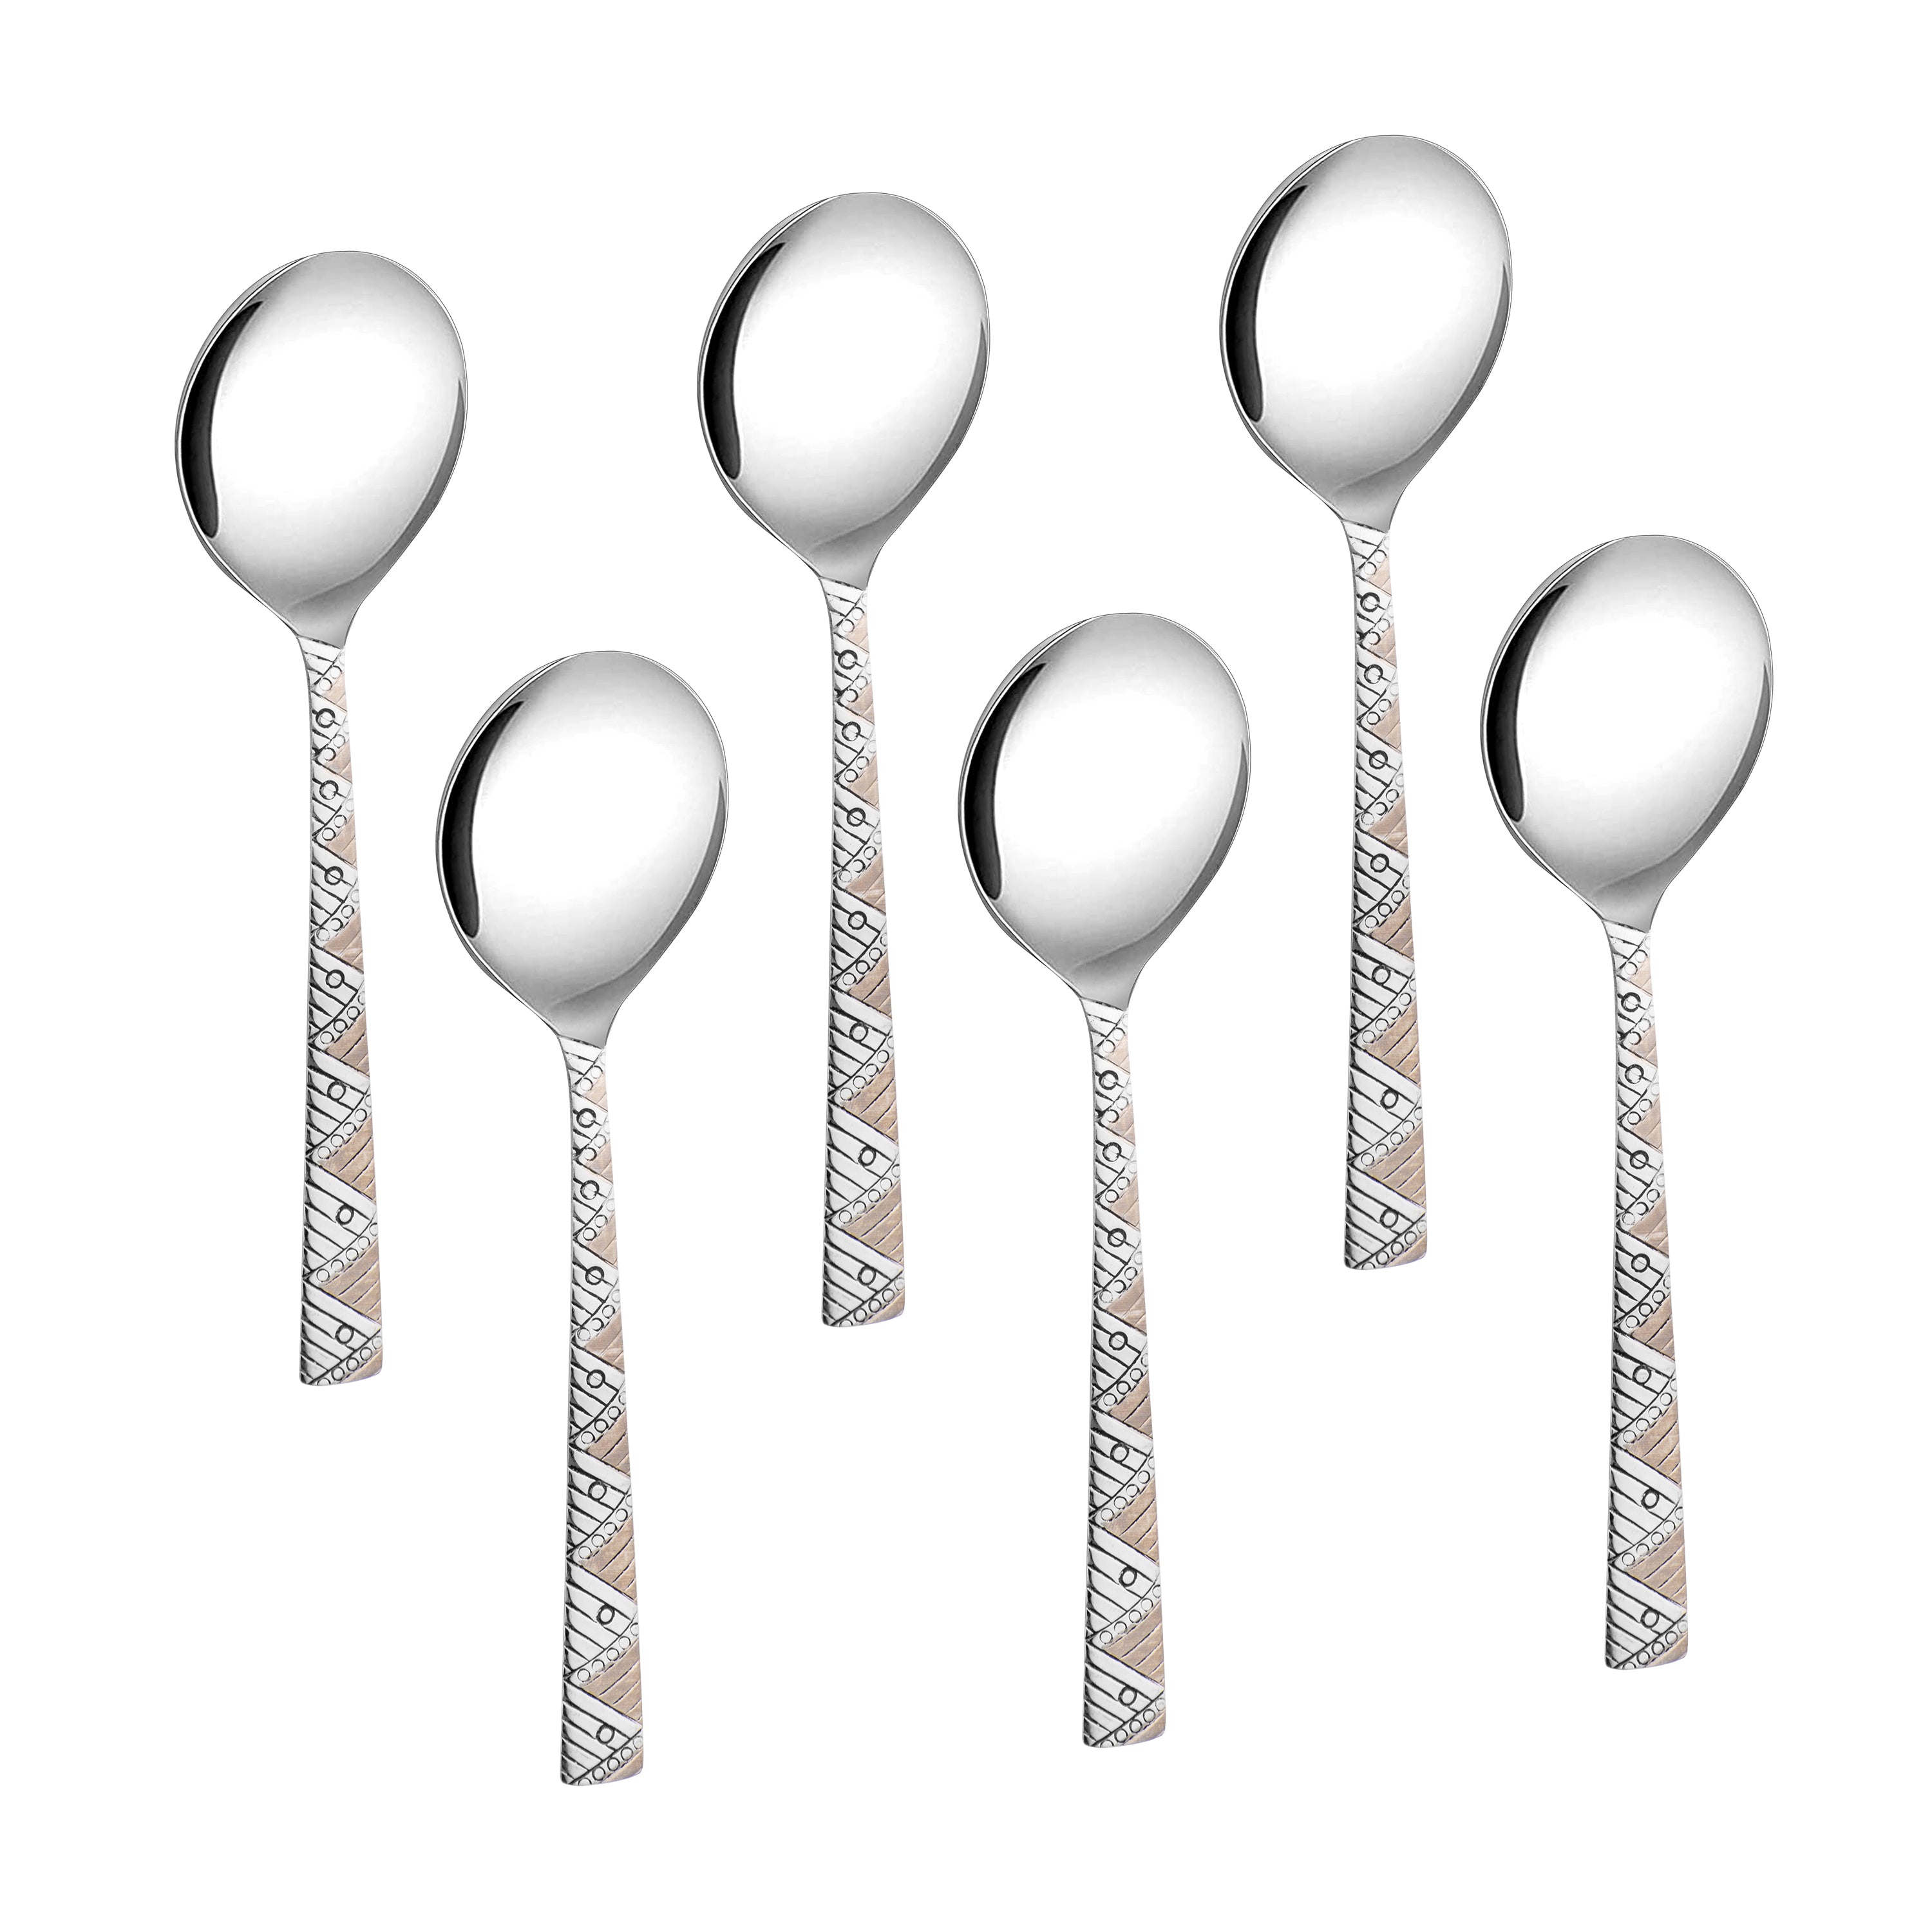 Arias by Lara Dutta Bloom Soup Spoon Set of 6 (Silver)